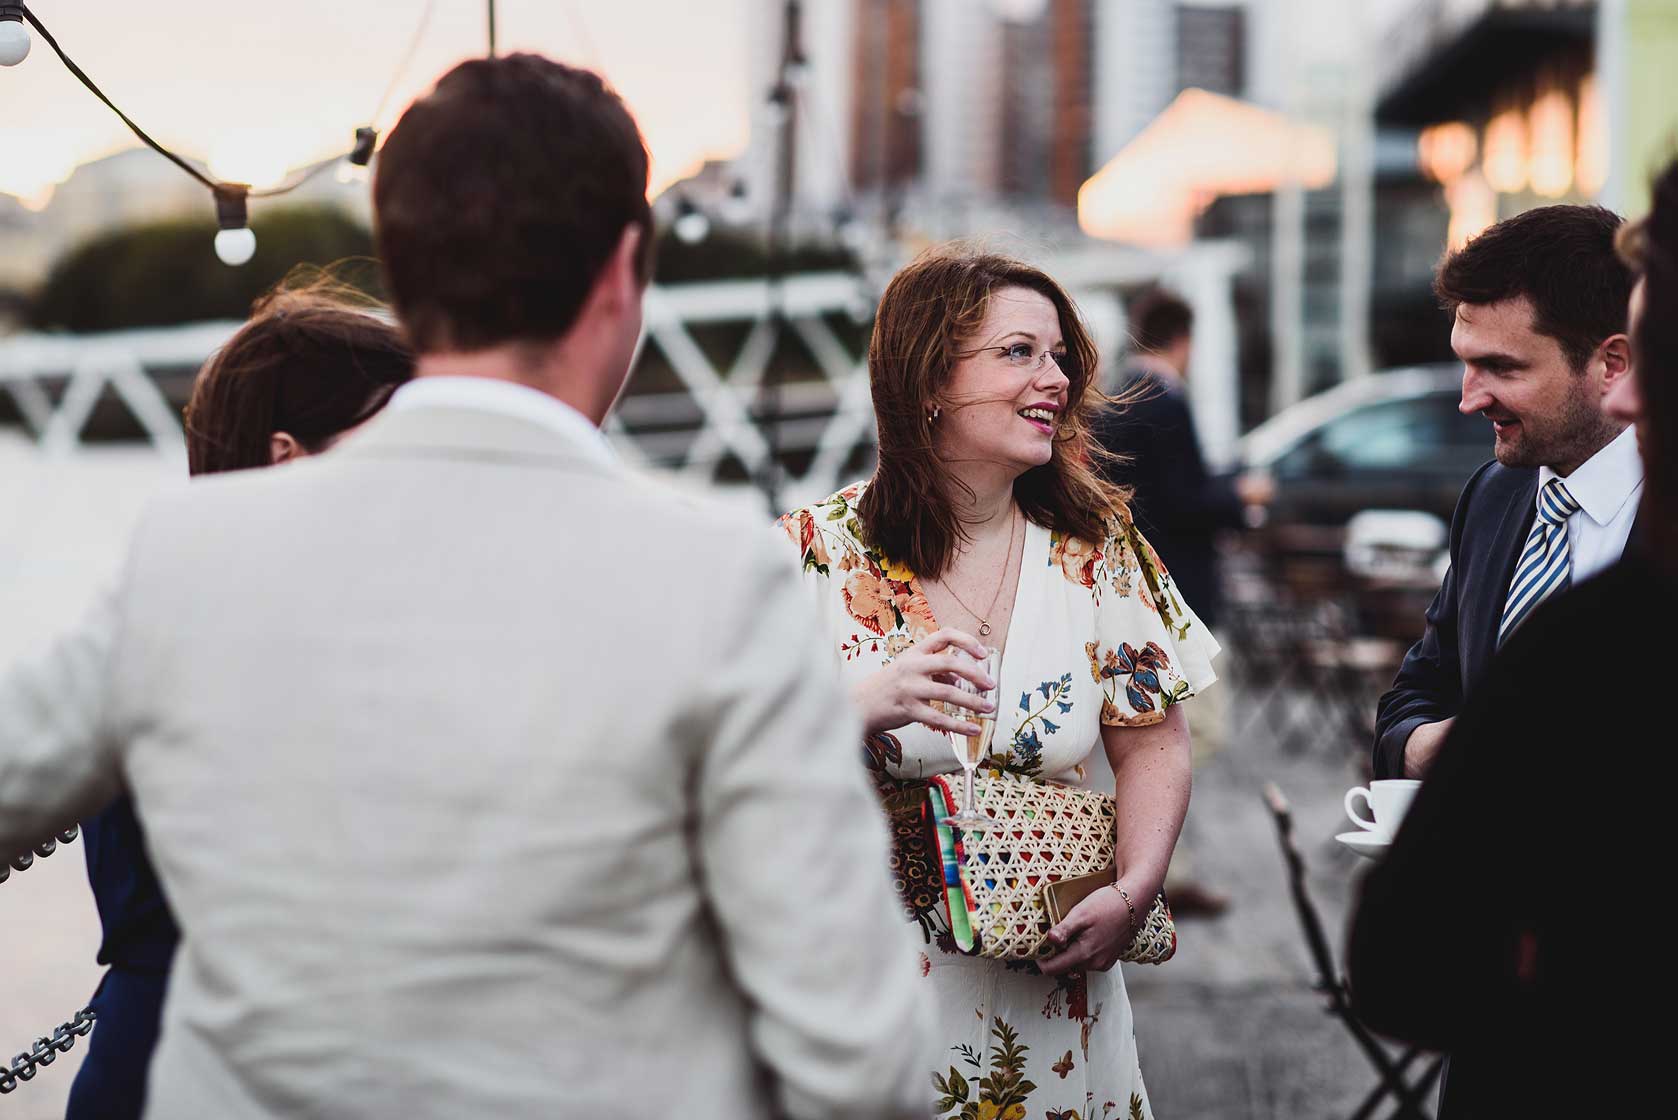 Reportage Wedding Photography at Trinity Buoy Wharf